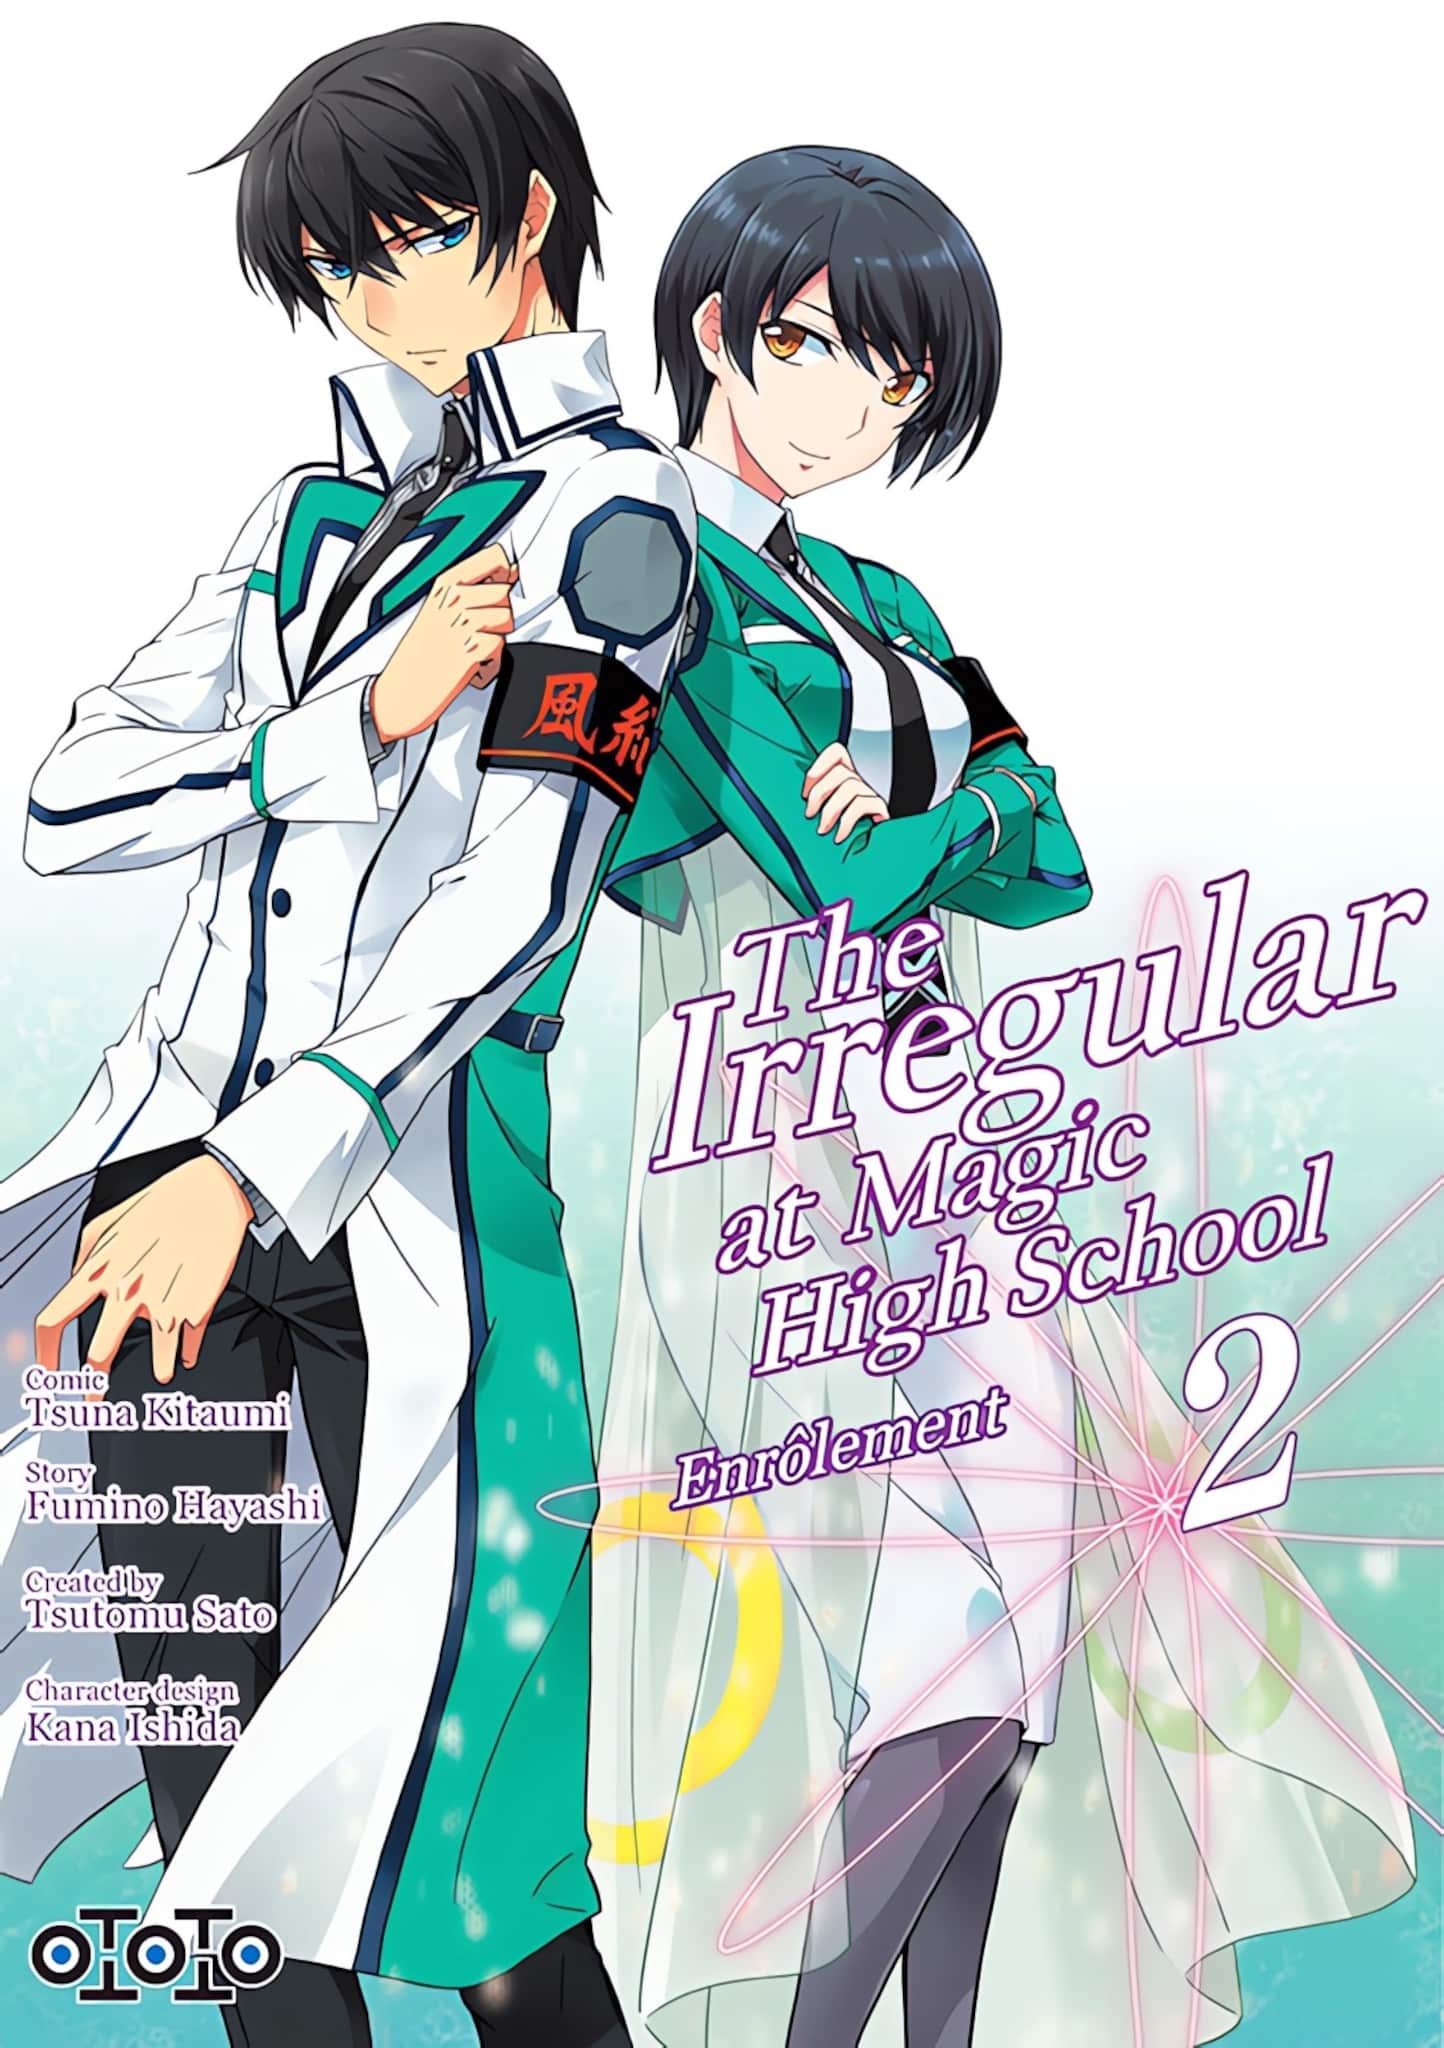 Tome 2 du manga The Irregular at Magic High School, arc Enrôlement